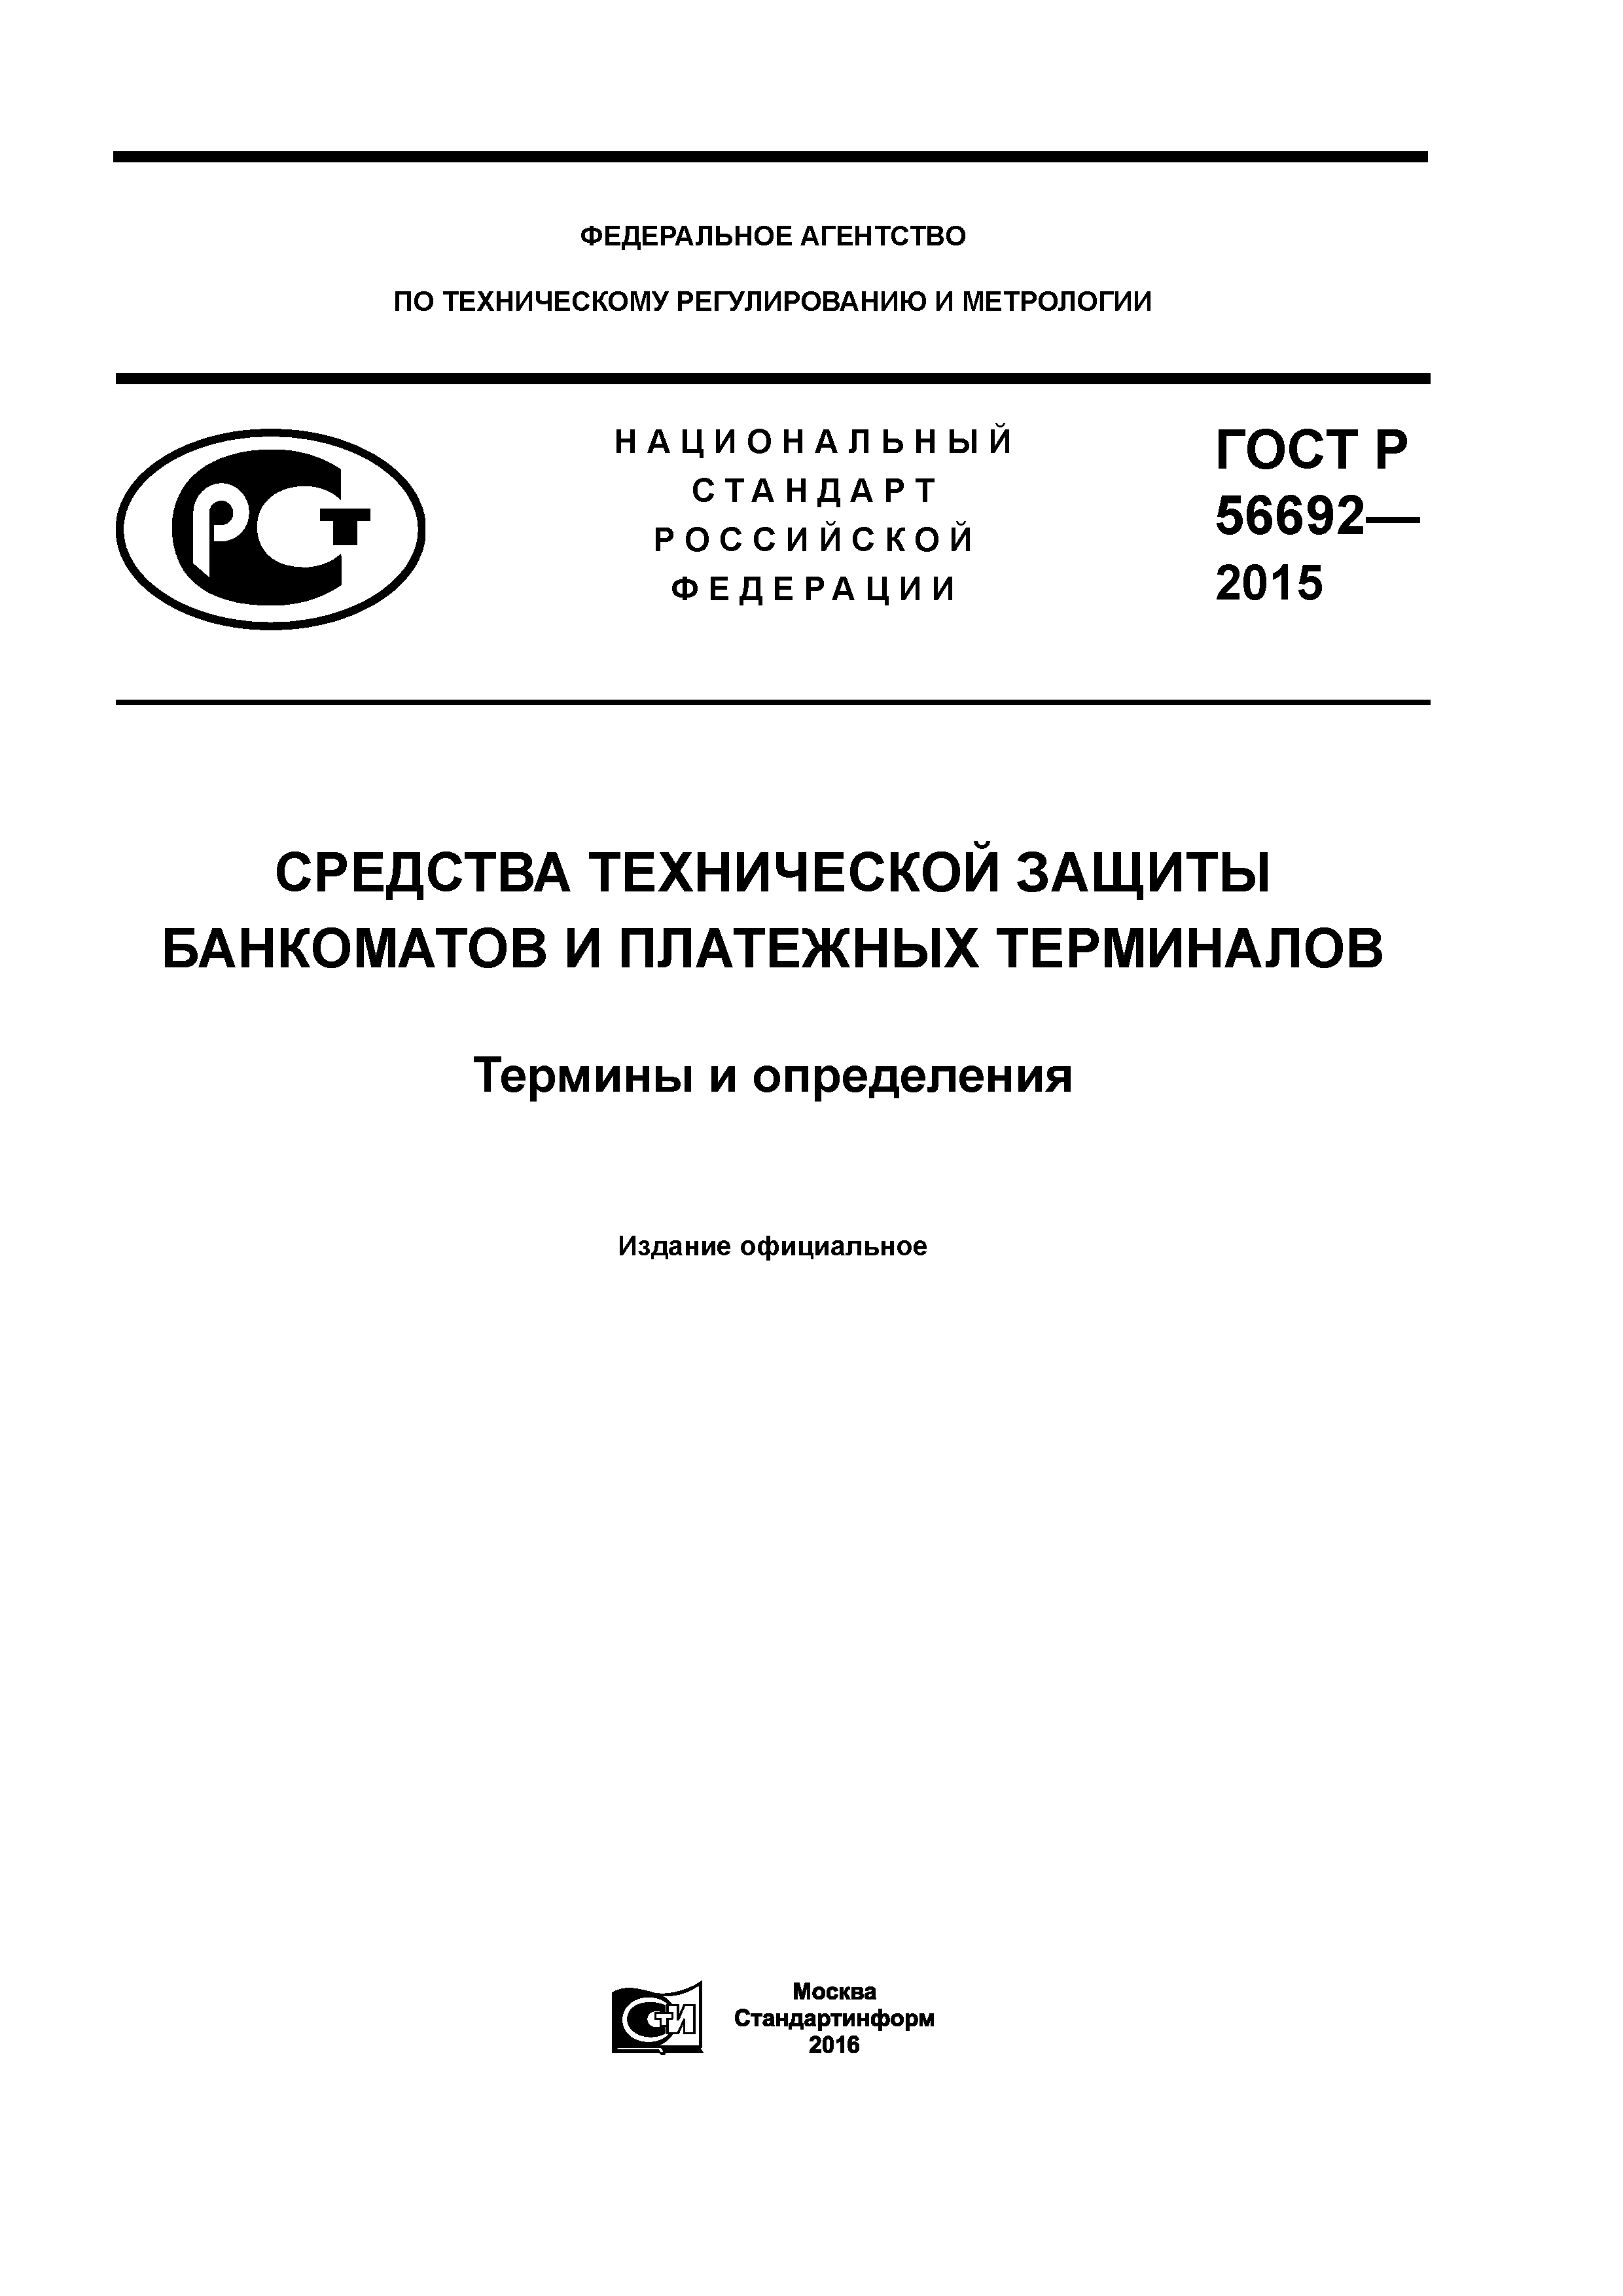 ГОСТ Р 56692-2015